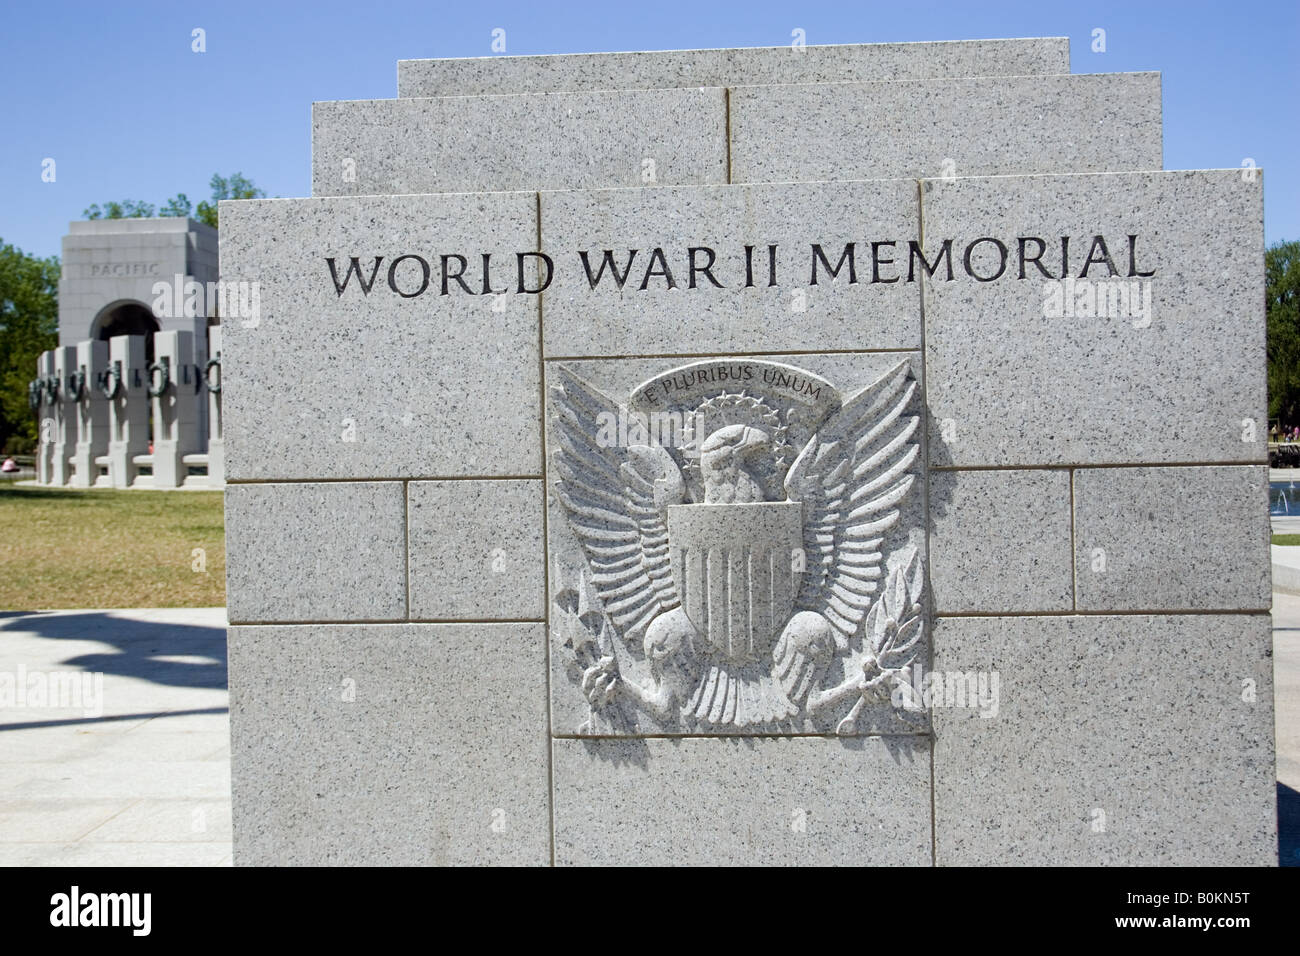 Great Seal and motto E PLURIBUS UNUM The National World War II Memorial Washington D C USA Stock Photo